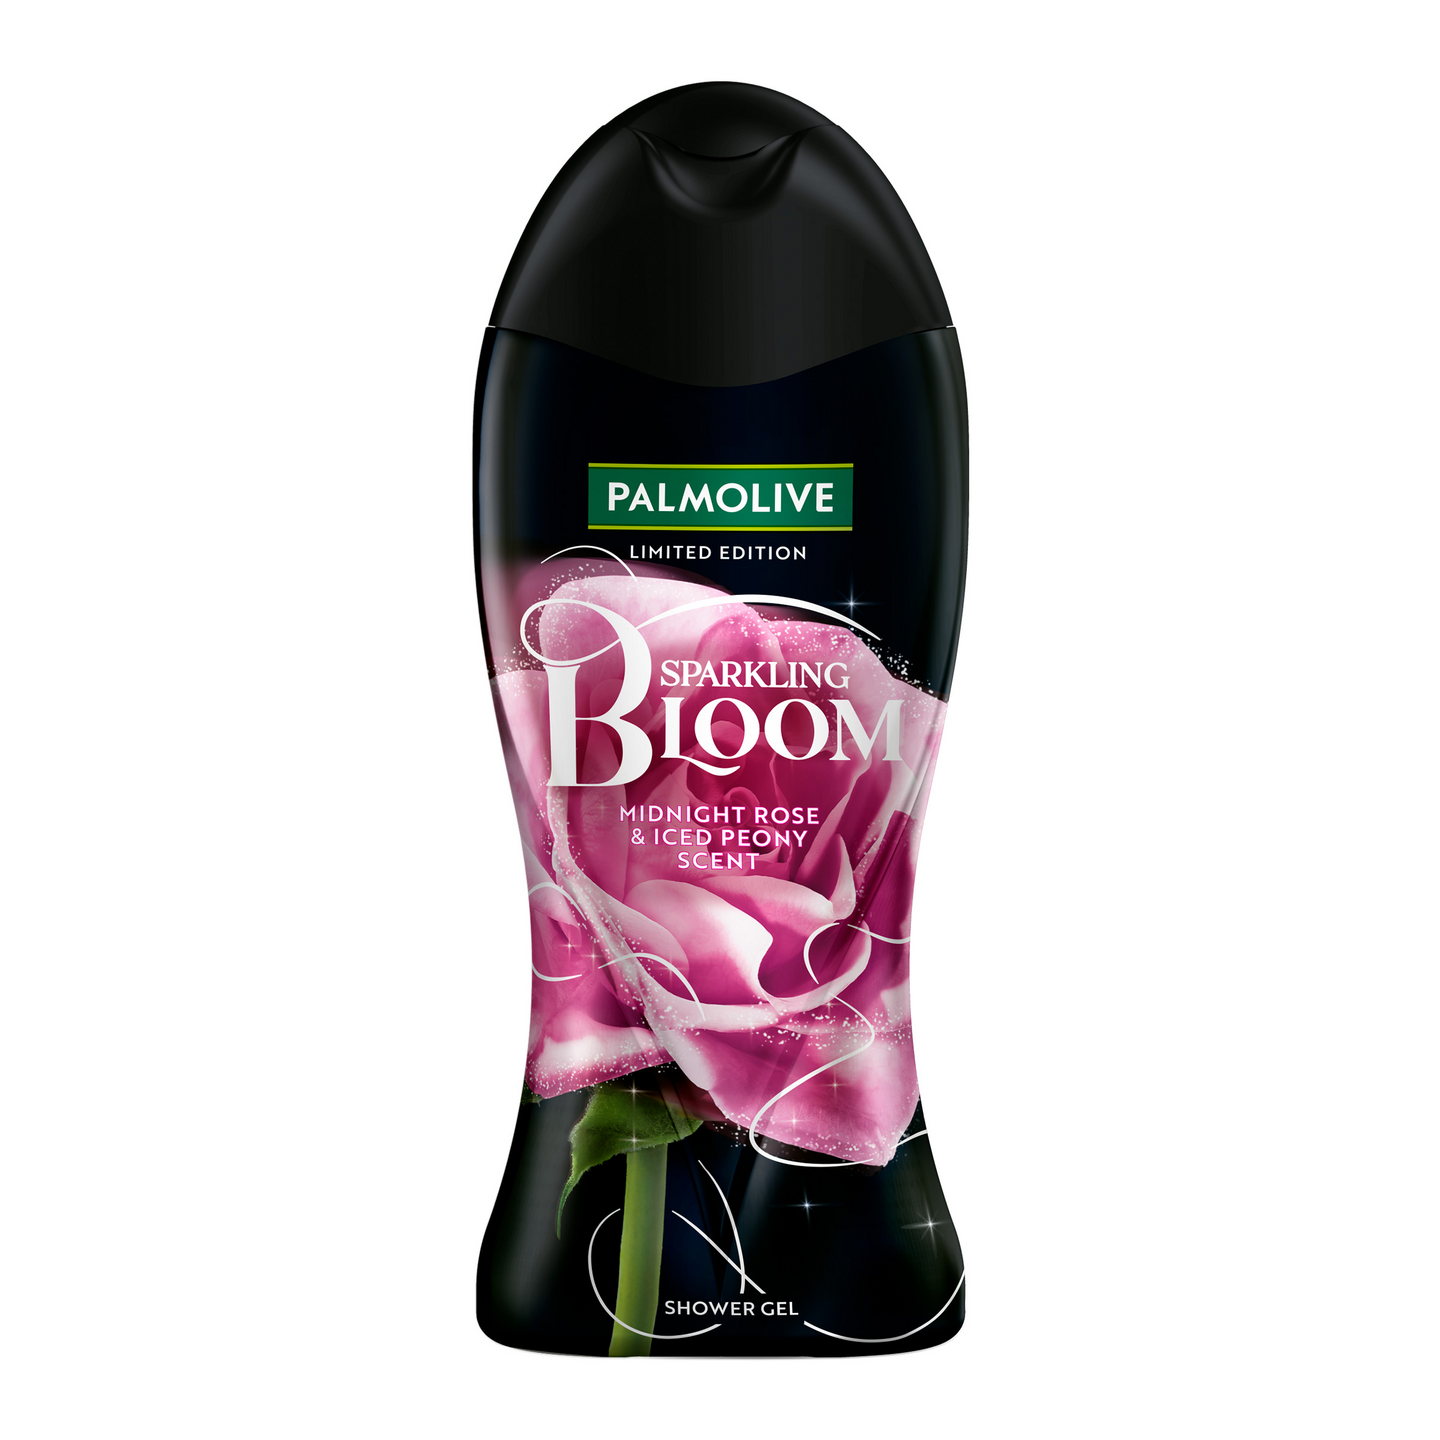 Palmolive Limited Edition Sparkling Bloom Rose & Piony suihkusaippua 250ml